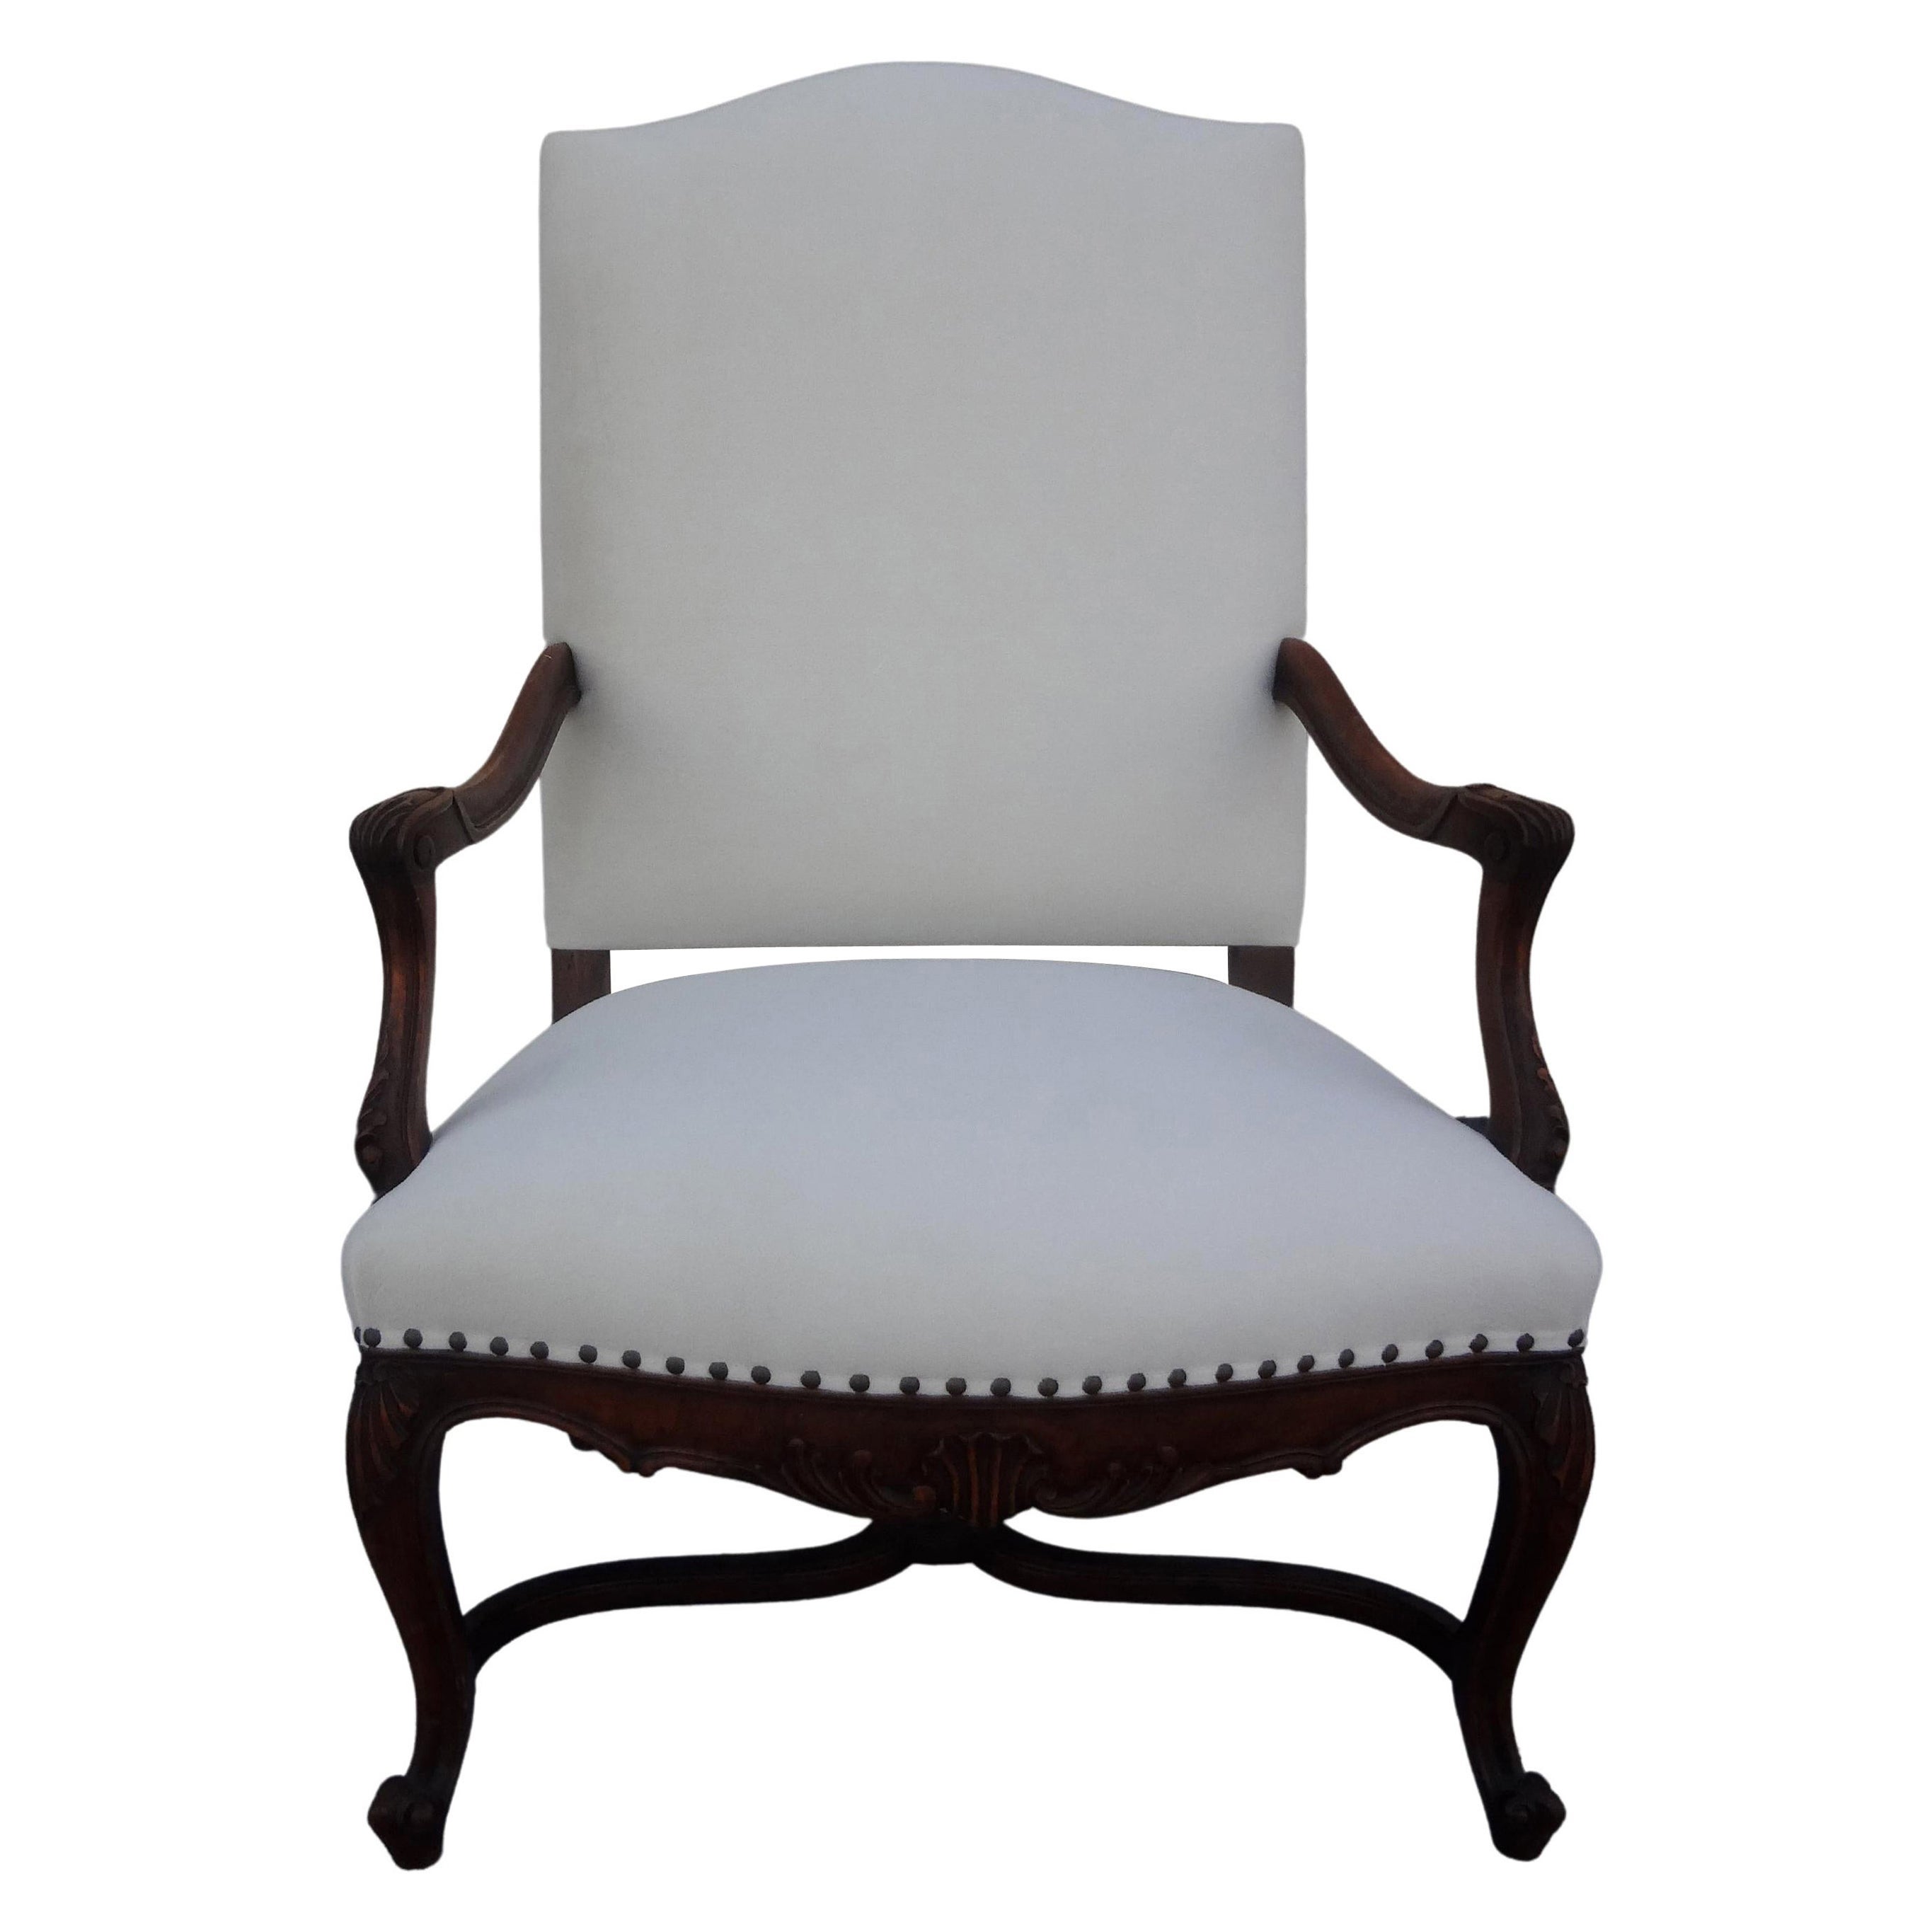 19th Century, French, Regence Style Walnut Chair